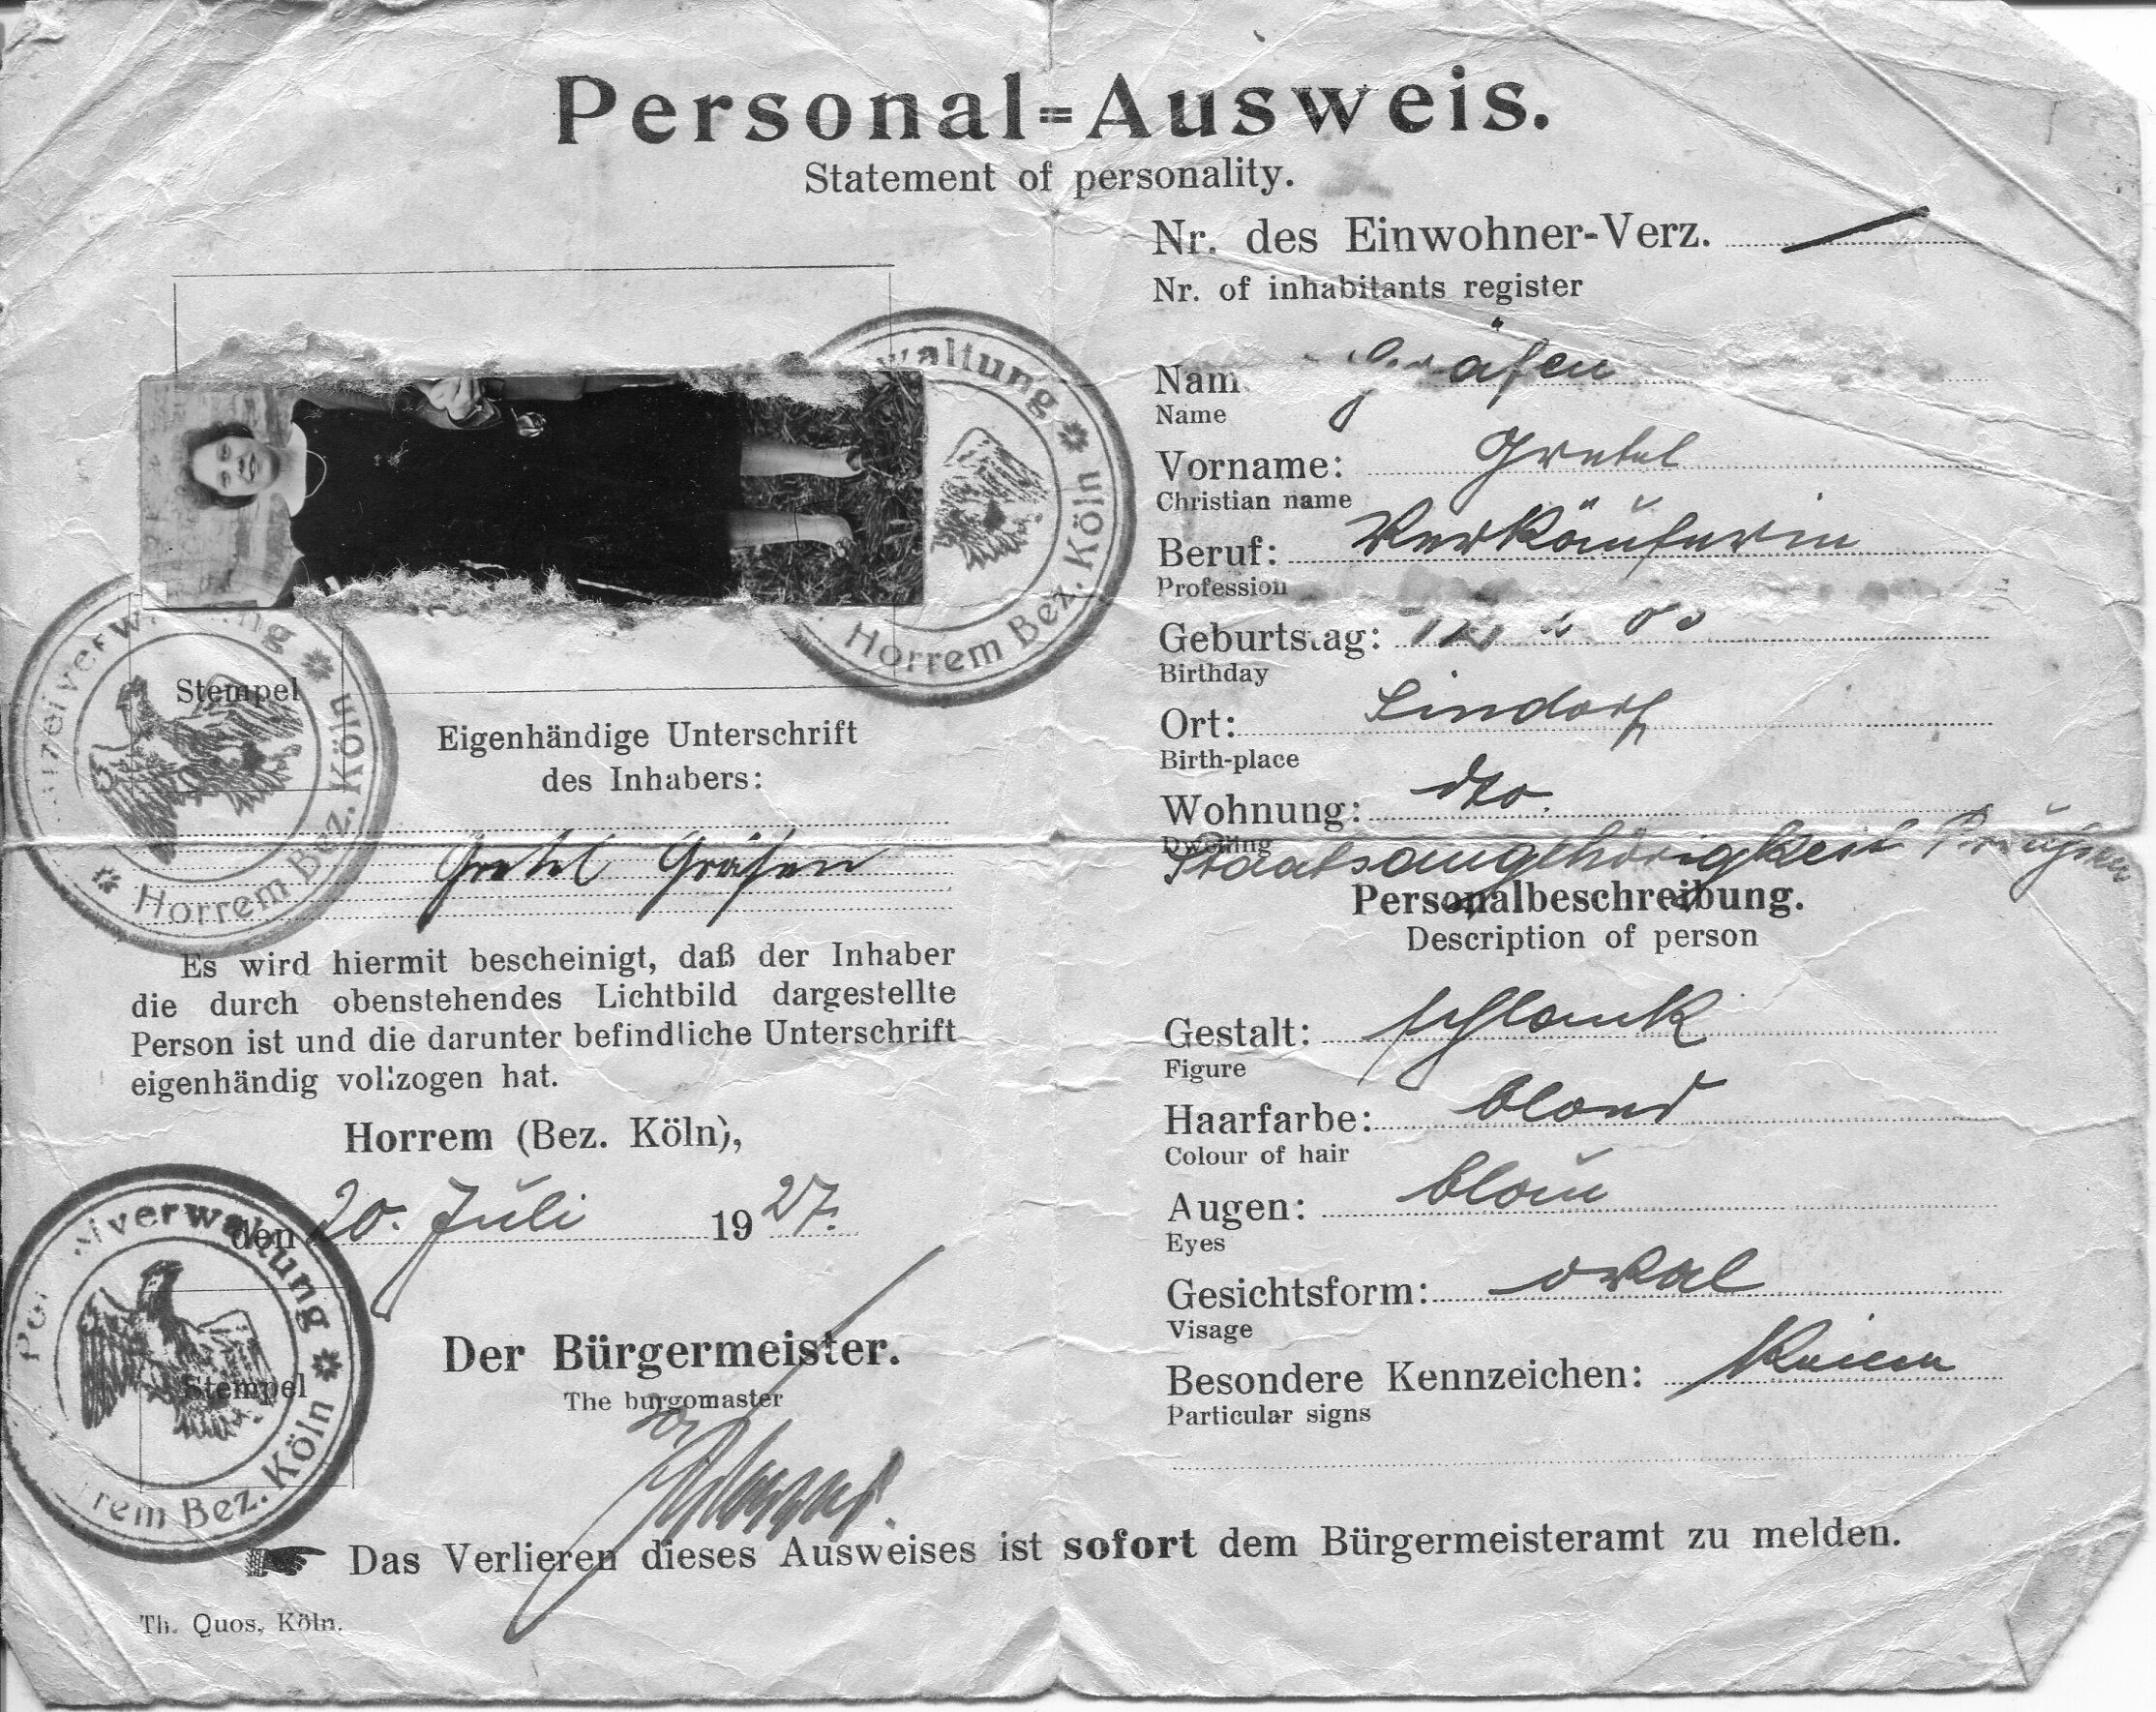 Ausweise | Personal-Ausweis | 1927 (Heimatmuseum Sindorf CC BY-NC-SA)